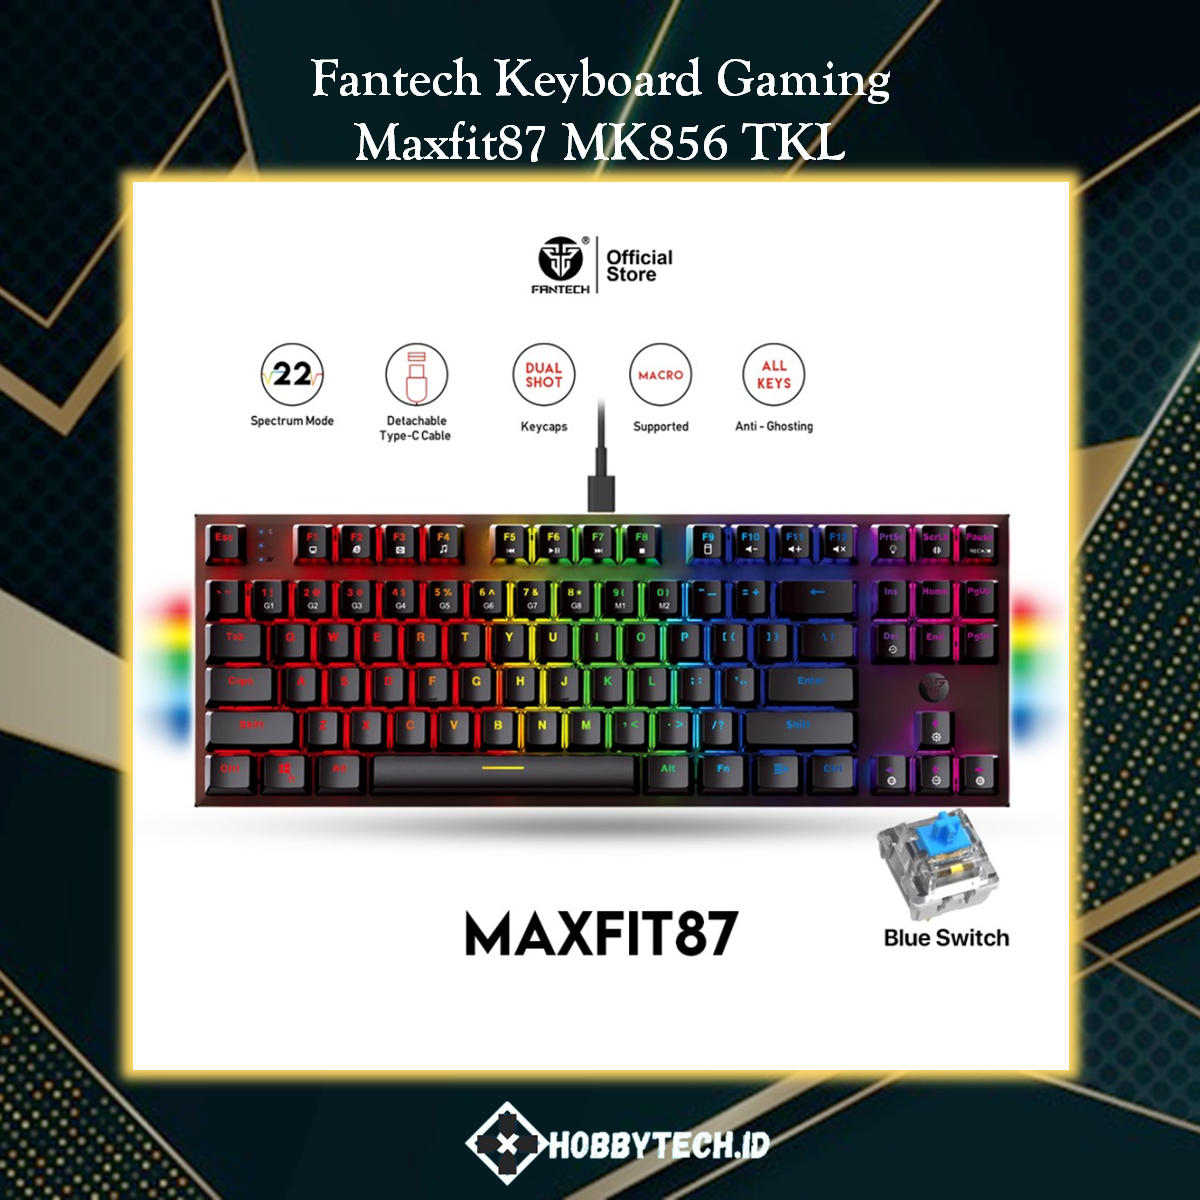 Fantech MAXFIT87 MK856 TKL Keyboard Gaming Mechanical